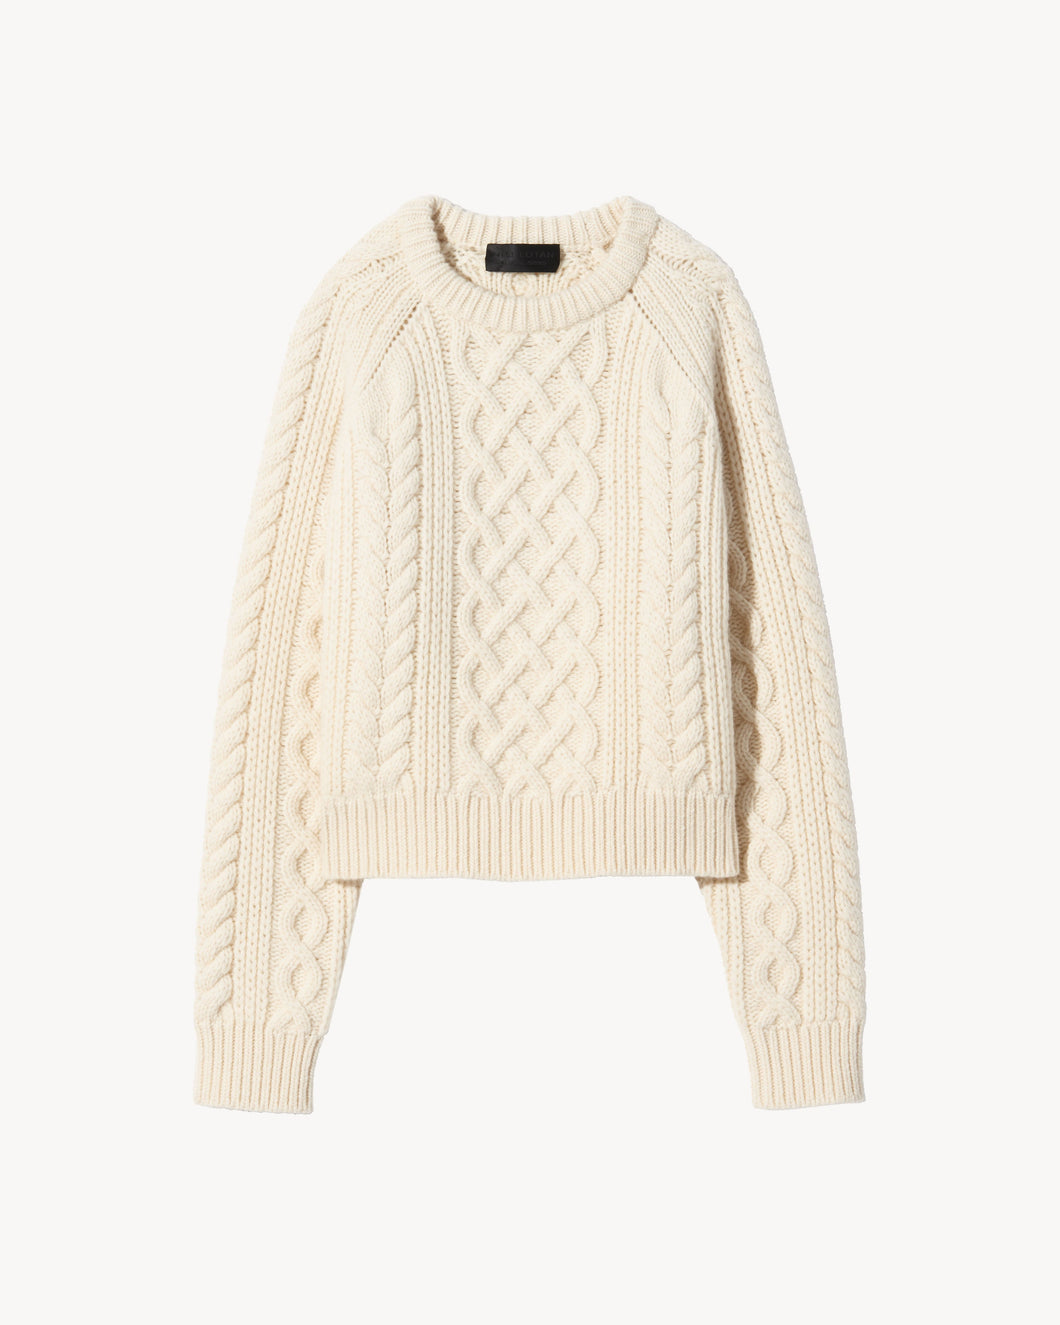 Coras Sweater